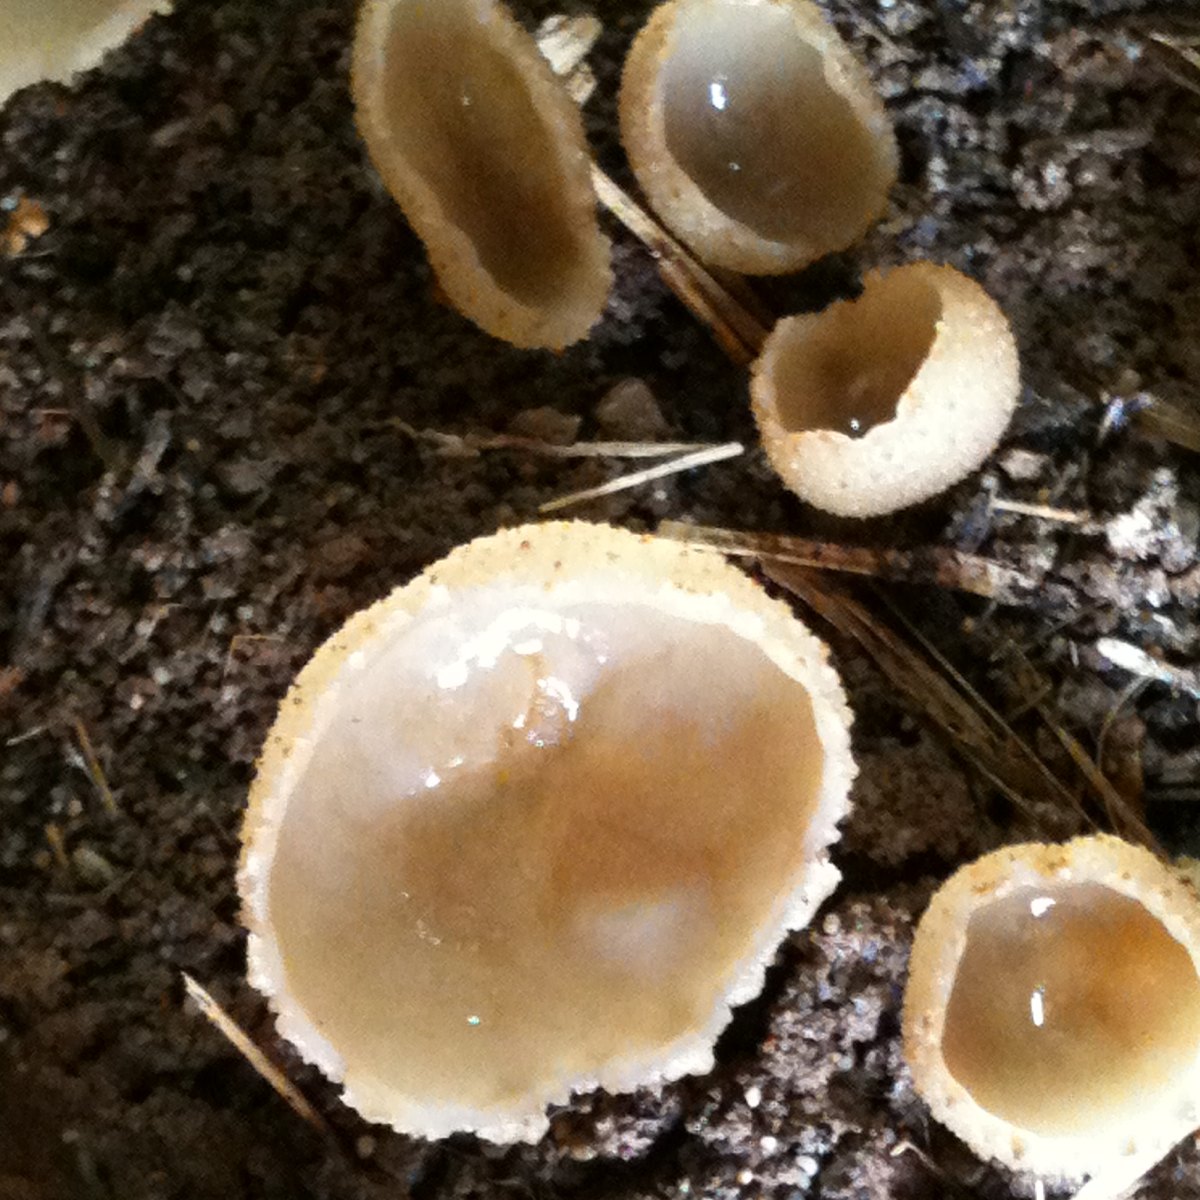 Cup mushroom or disc fungi